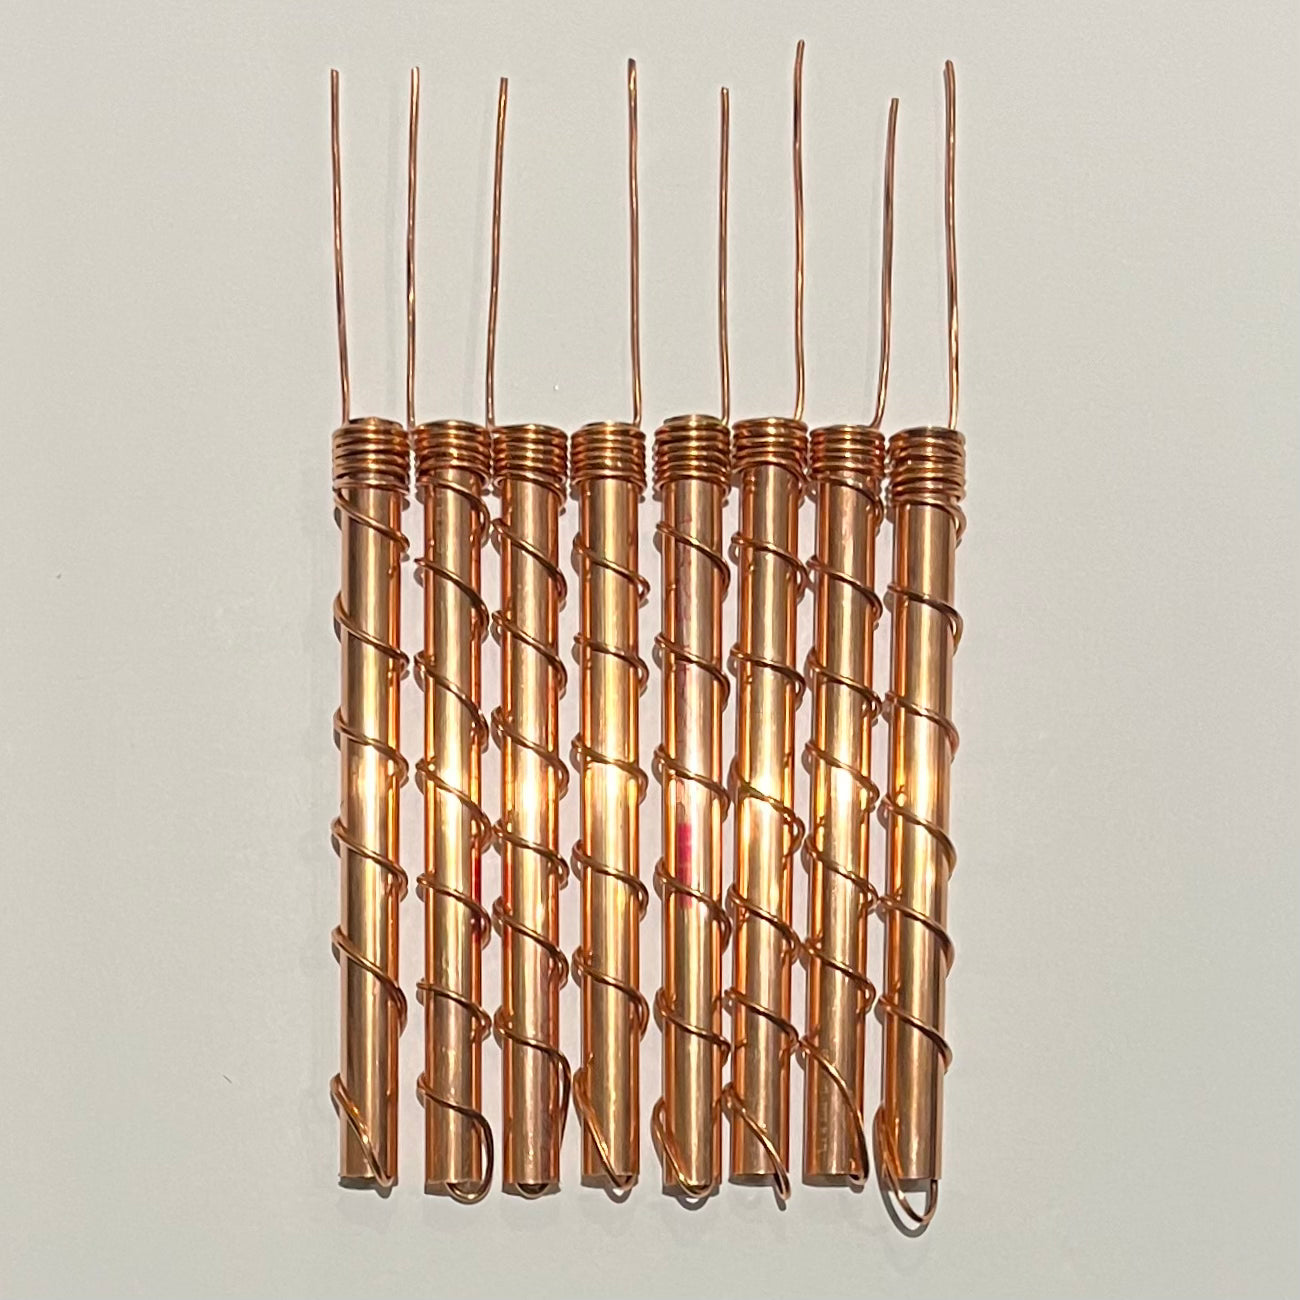 One Thread - Electro Culture Copper Antenna – Fairy Tale Crops